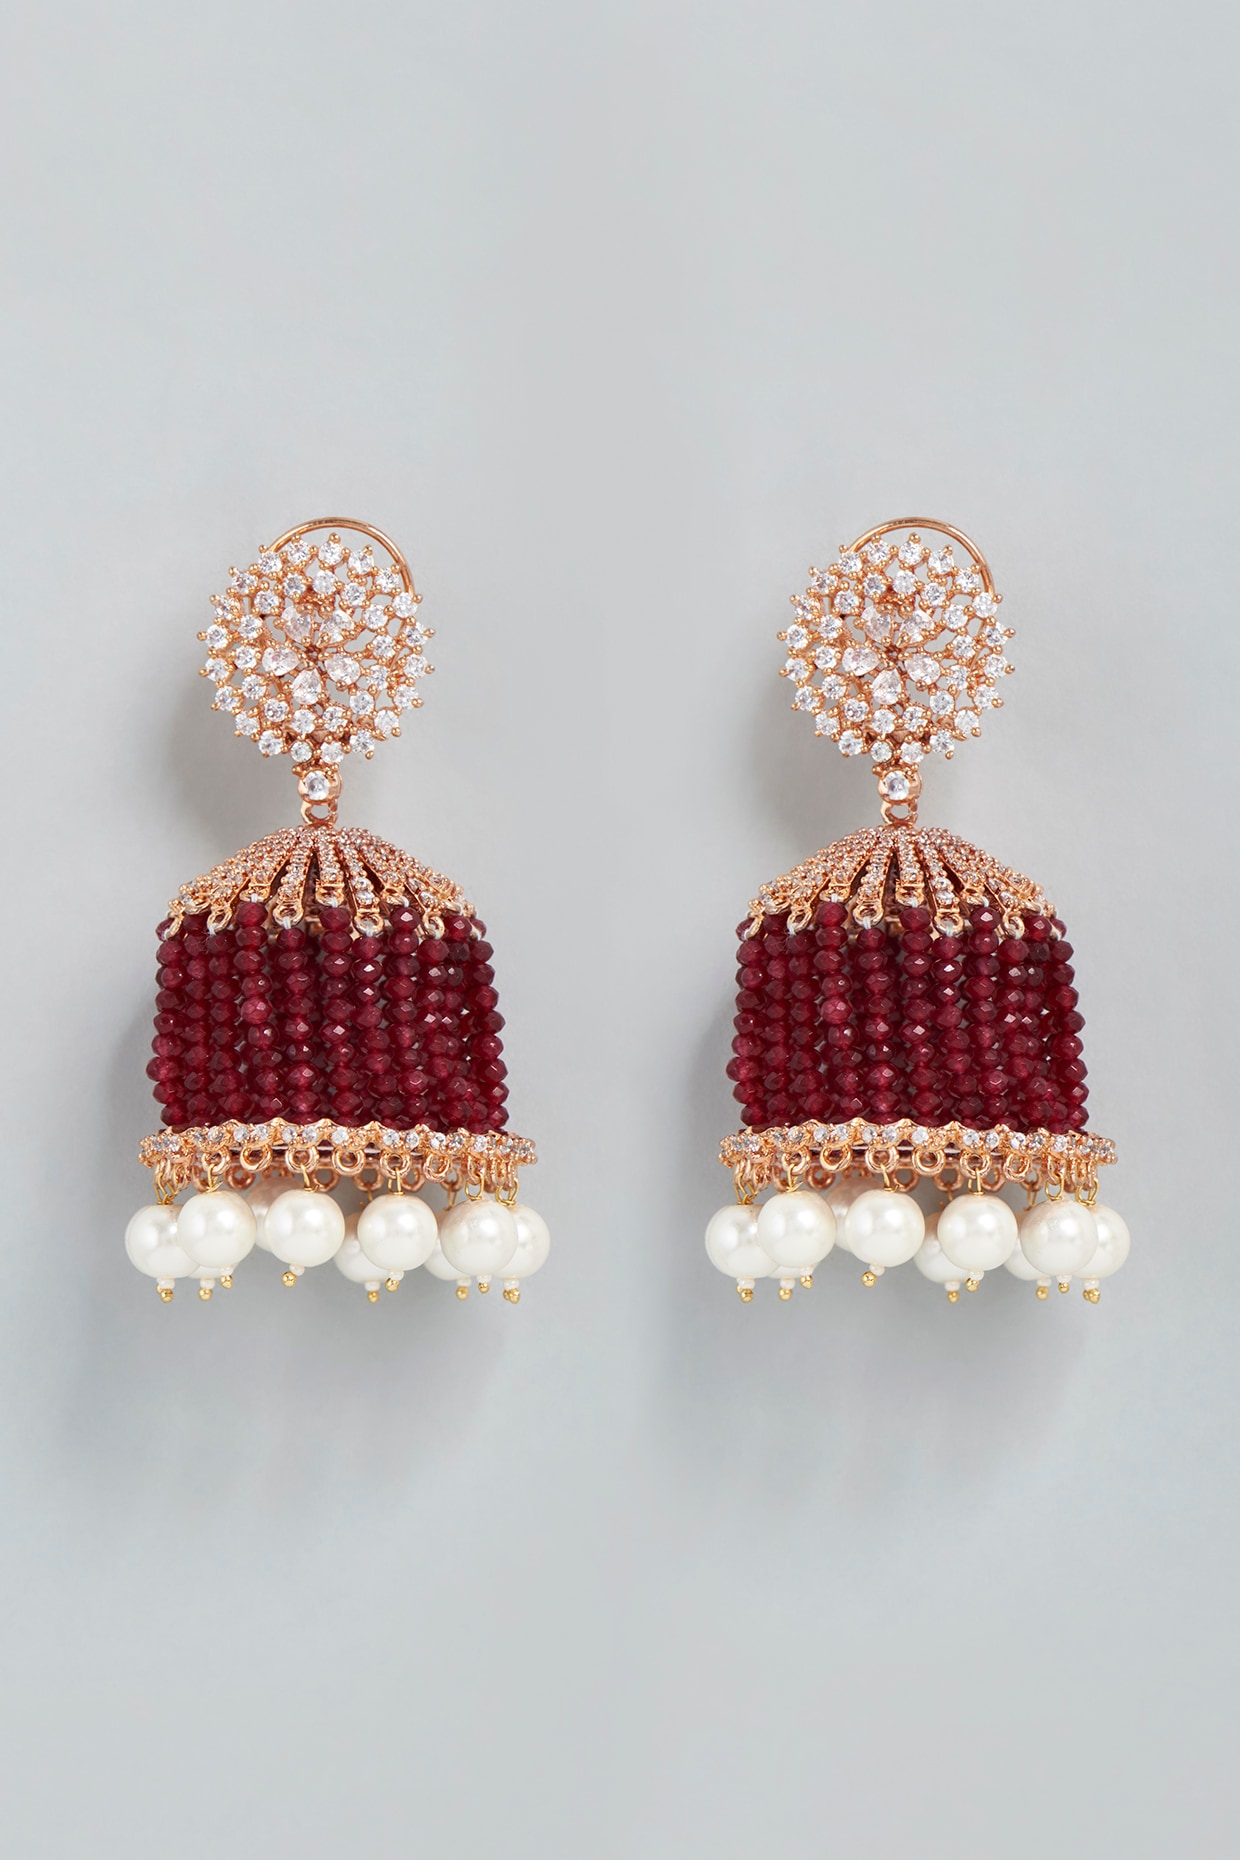 Dark Pink Jhumka Earrings for Saree | FashionCrab.com | Earrings for saree,  Indian bridal jewelry sets, Jhumka earrings